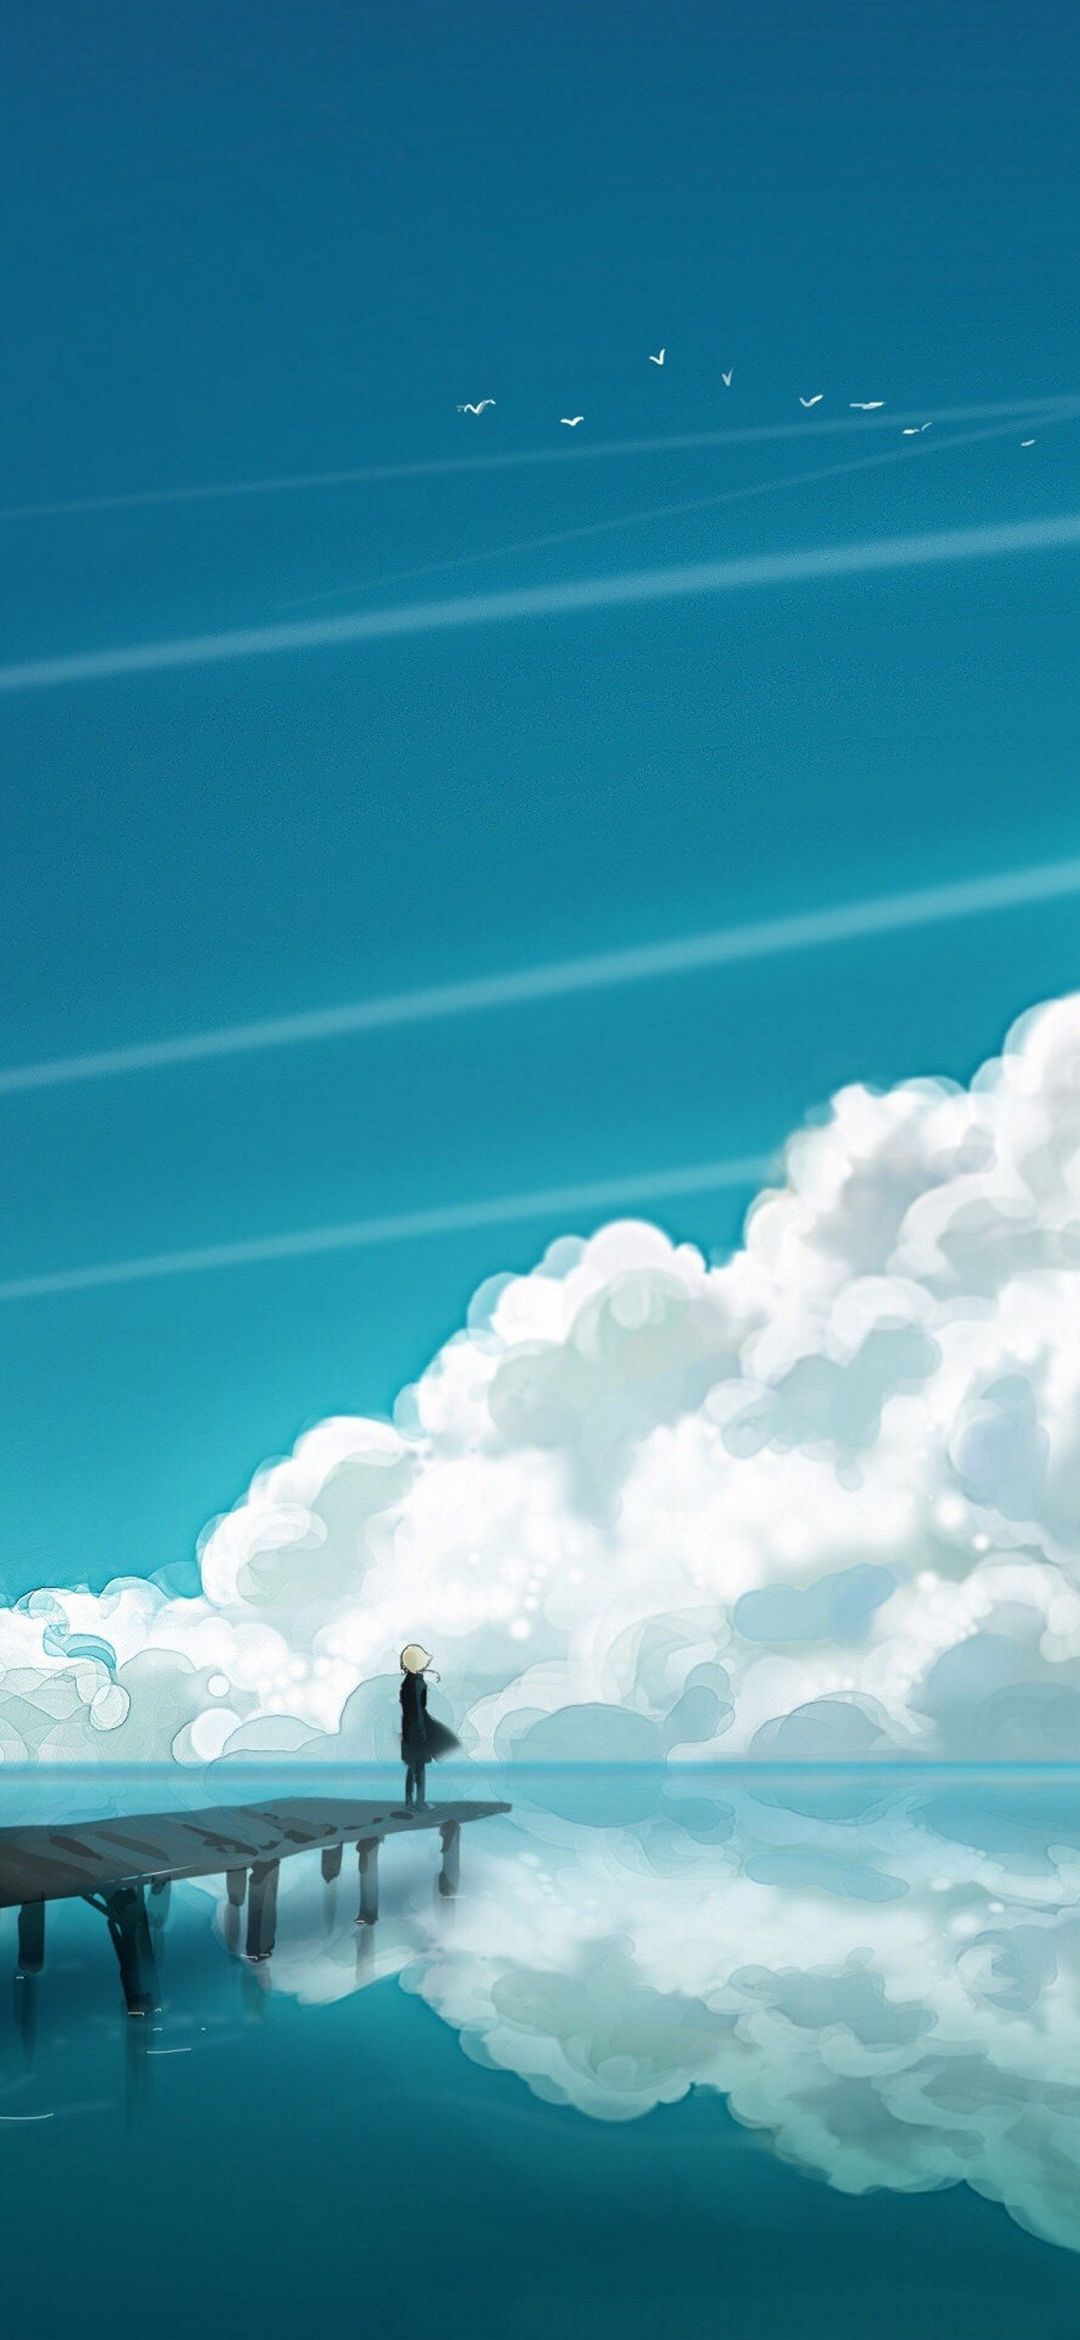 Anime Sky Minimal Wallpaper 1080X2340. Minimal wallpaper, Wallpaper ghibli, iPhone background minimal